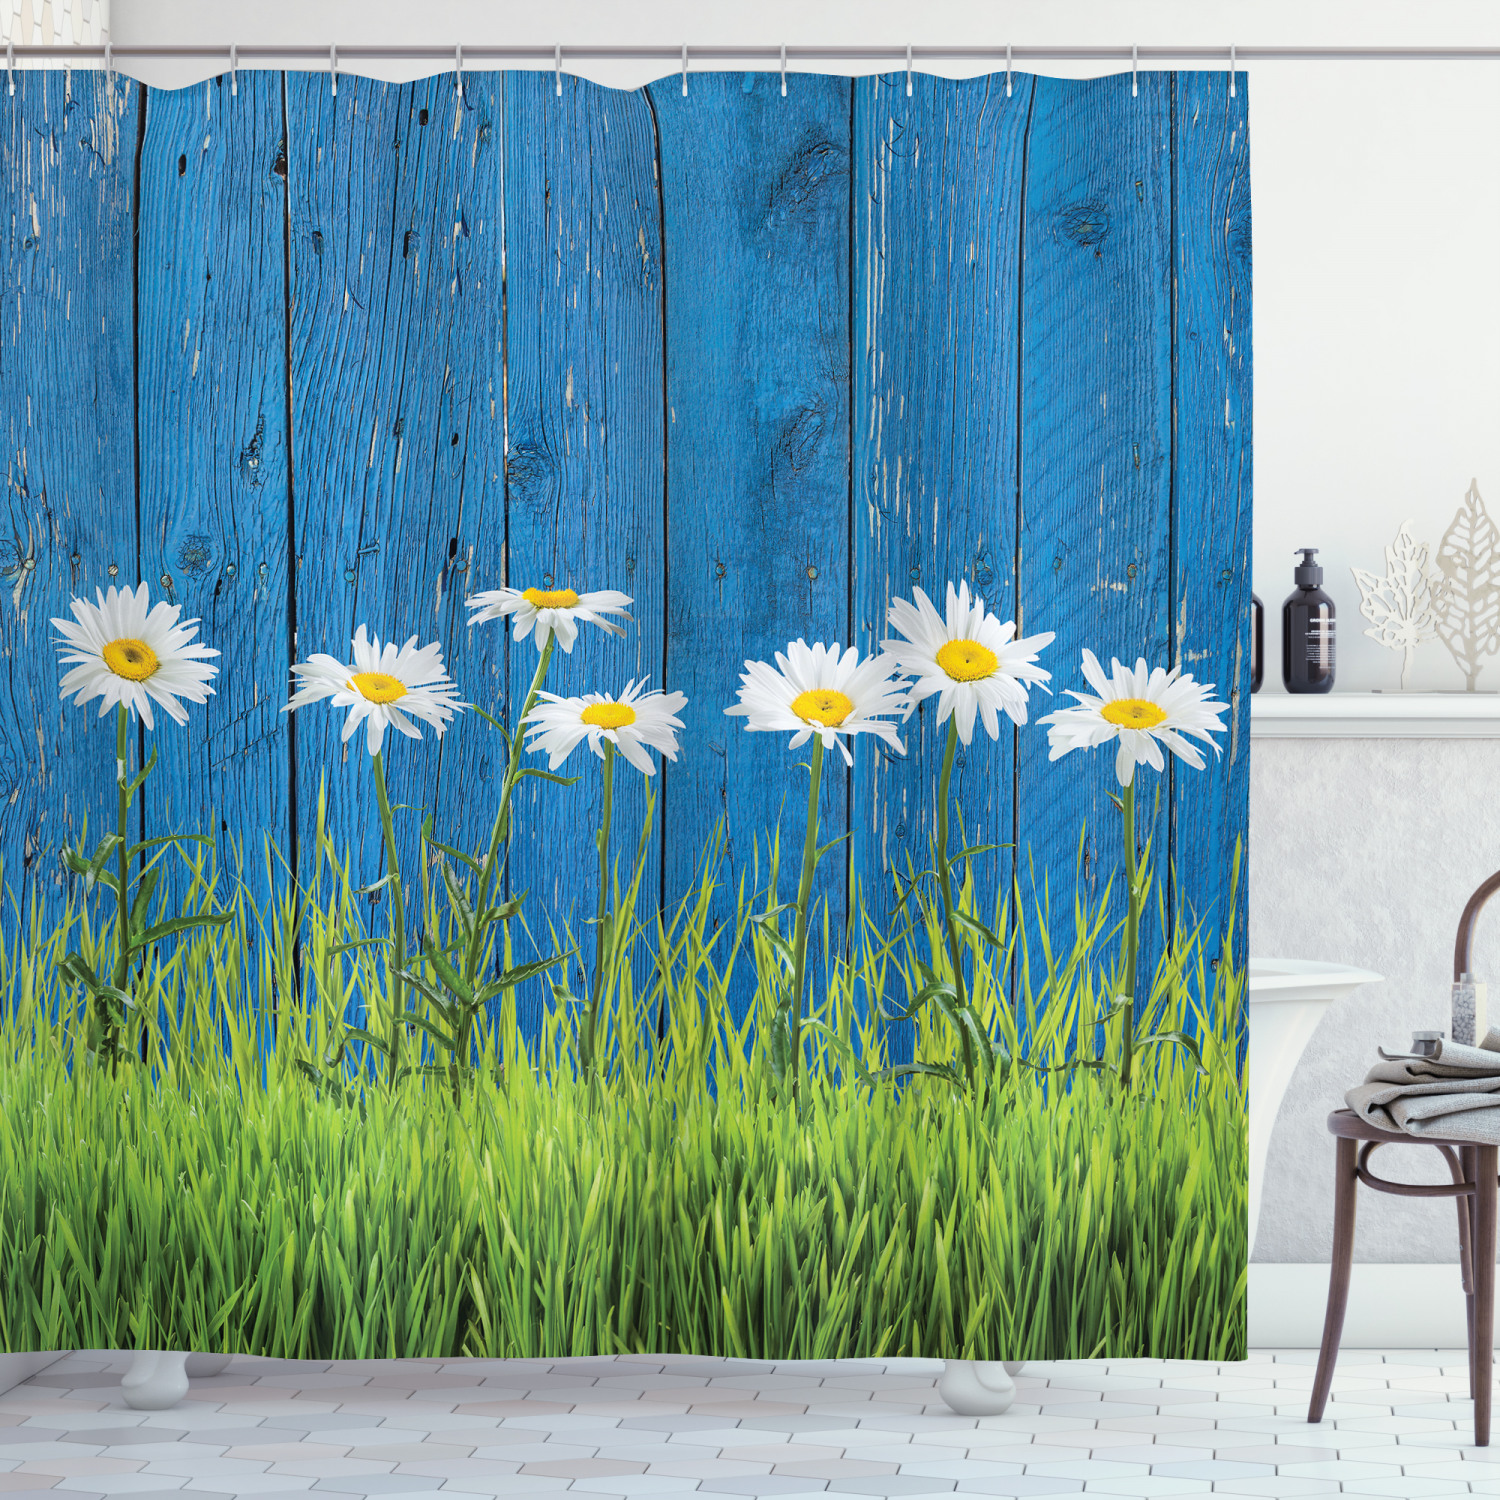 Flower Shower Curtain Spring Grass and Daisy Print for Bathroom